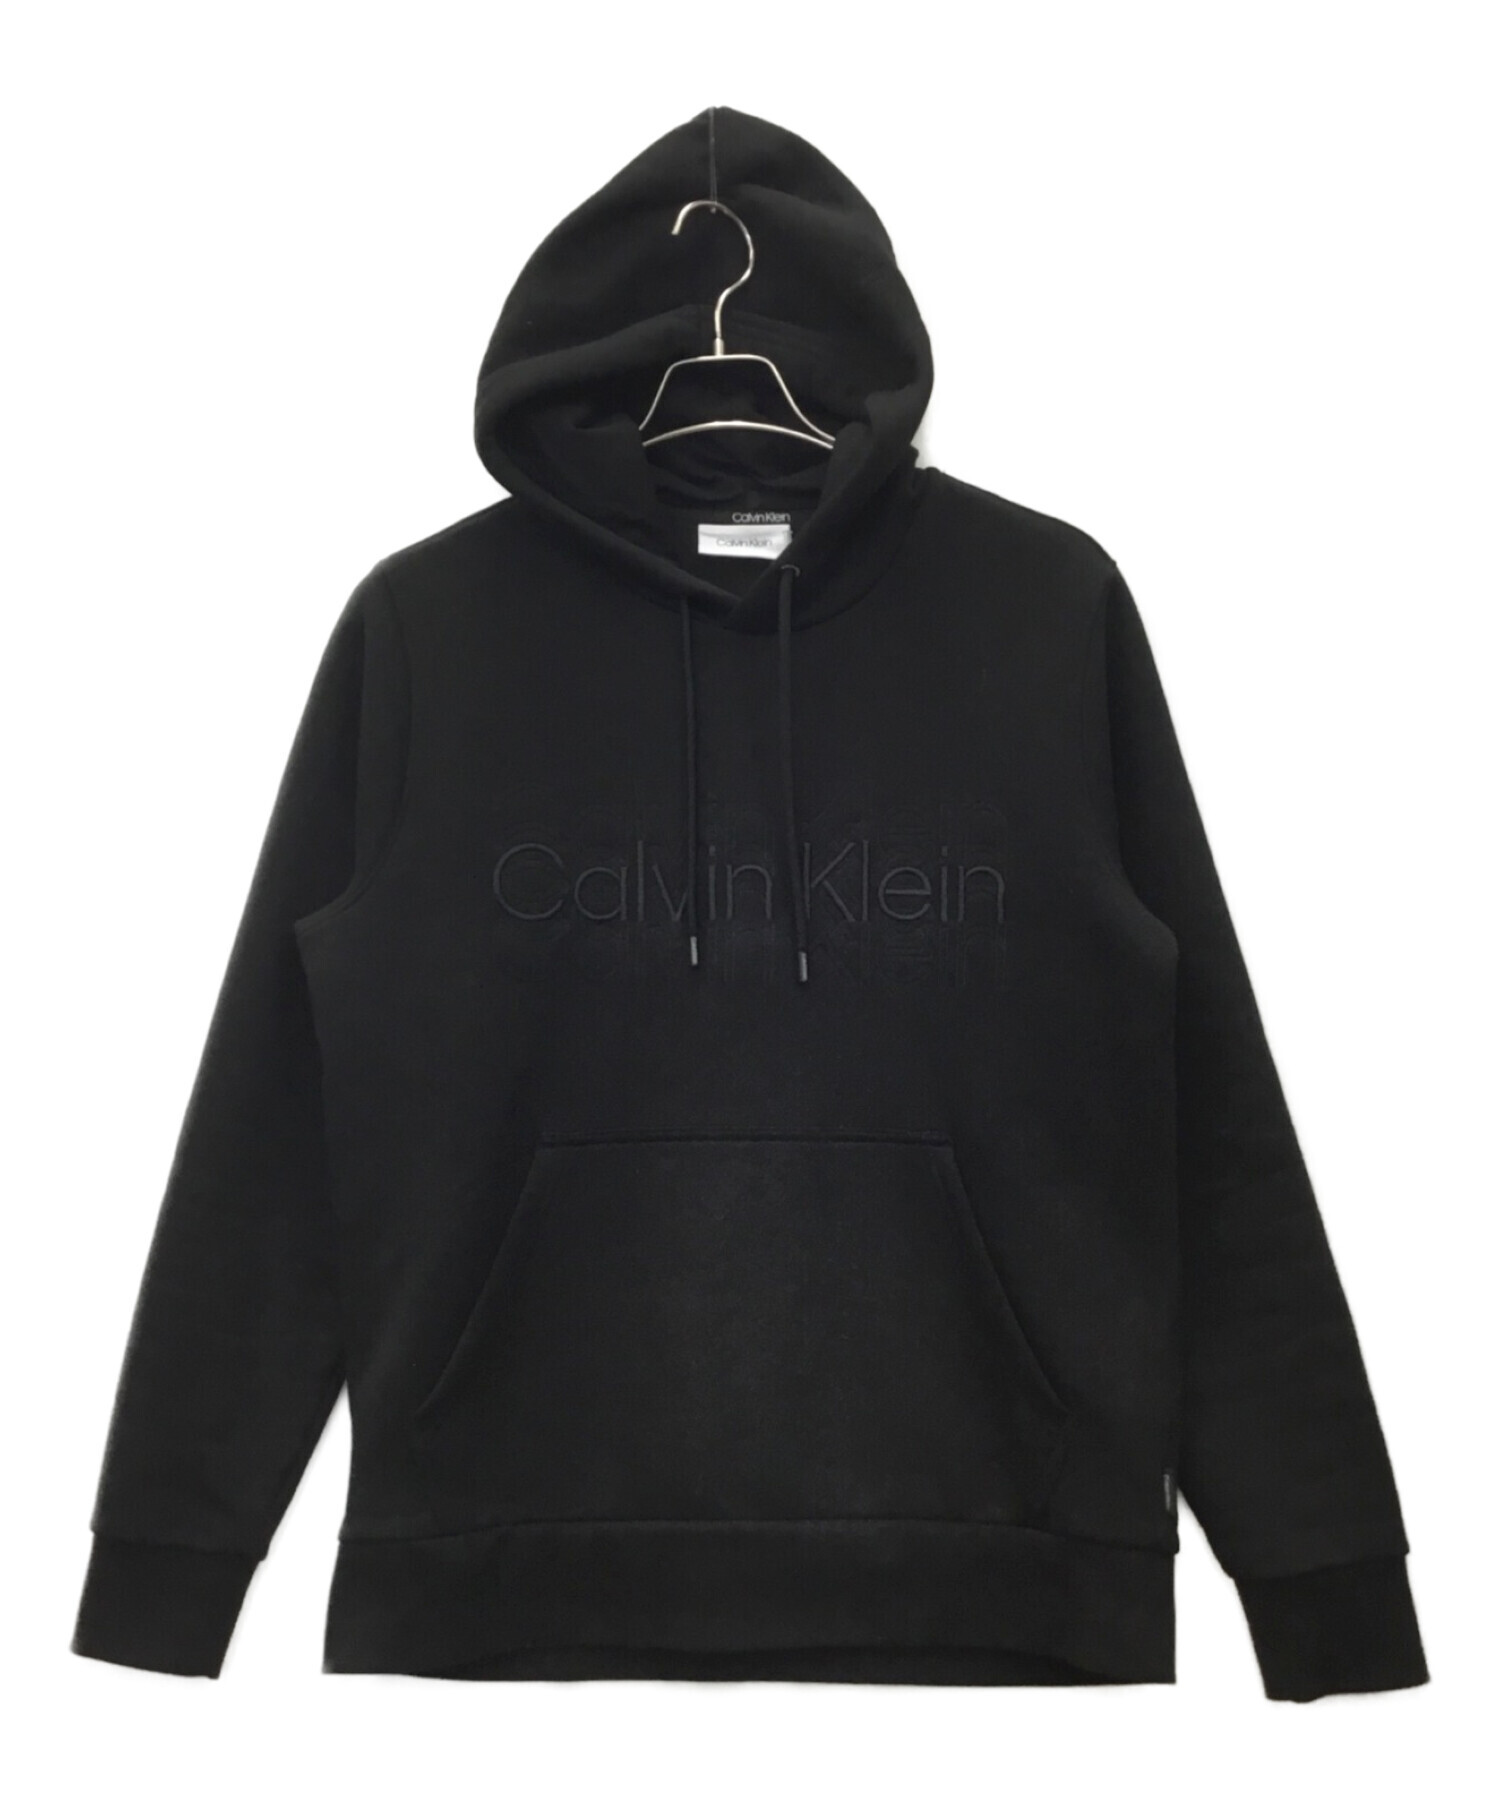 Calvin Klein (カルバンクライン) プルオーバーパーカー ブラック サイズ:S